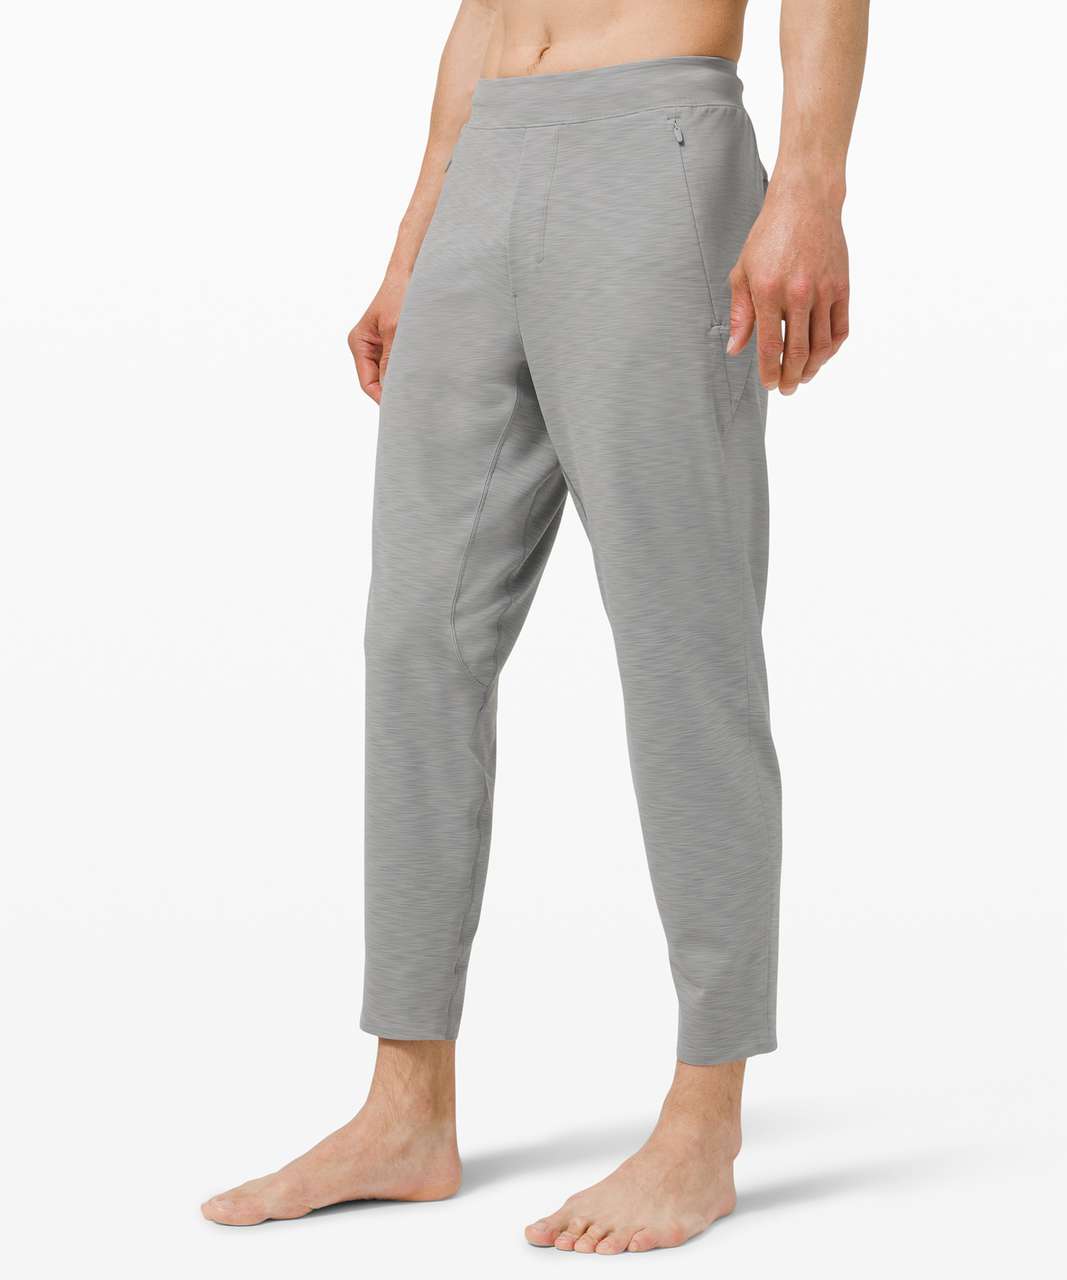 Lululemon Athletica Gray Active Pants Size 4 - 54% off